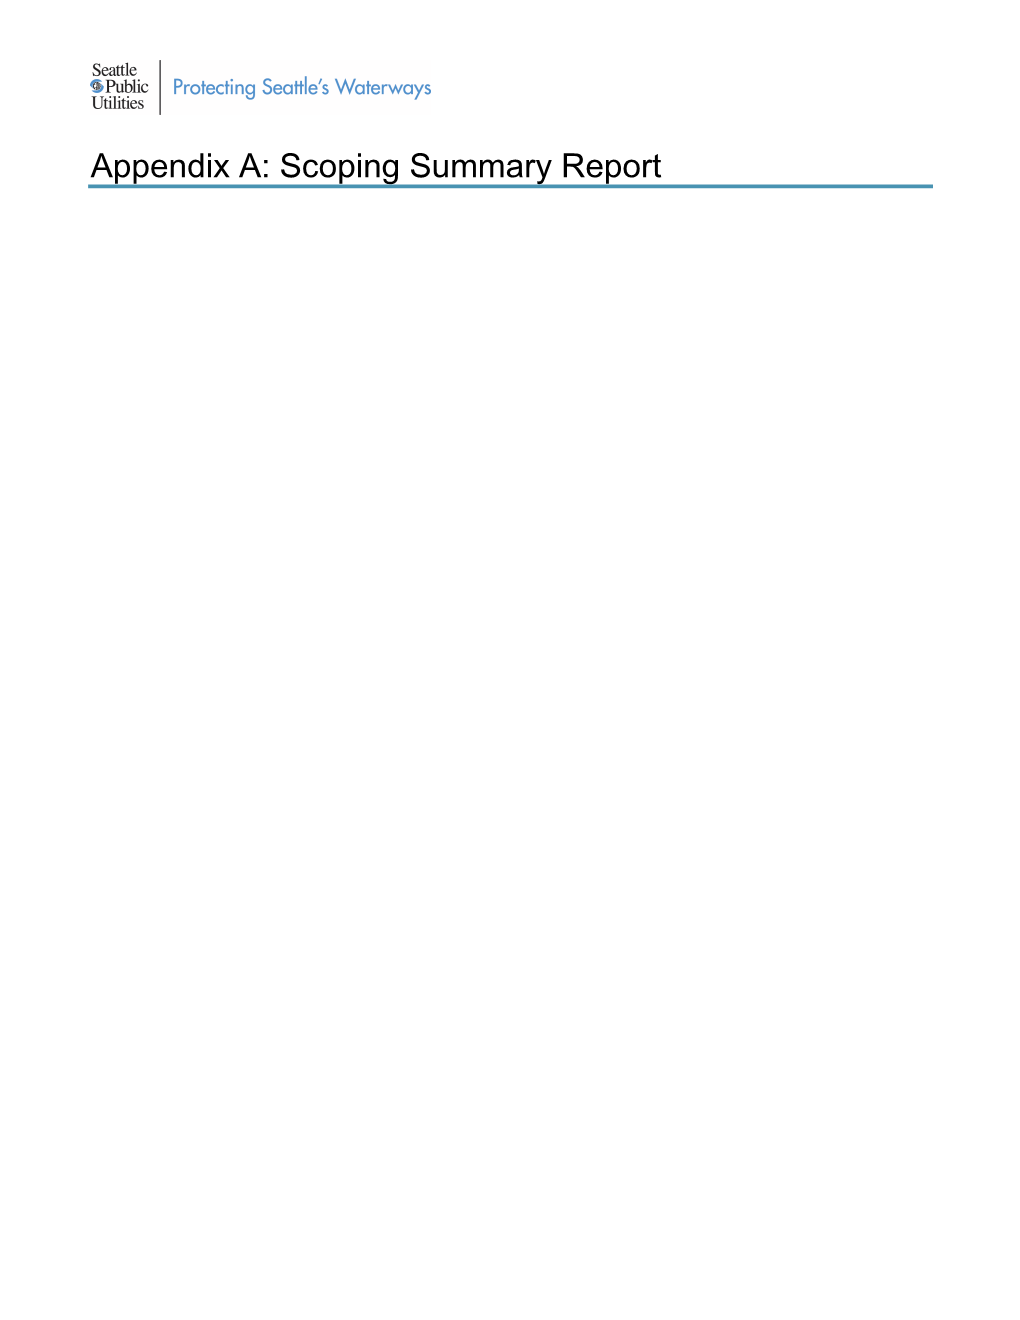 Scoping Summary Report